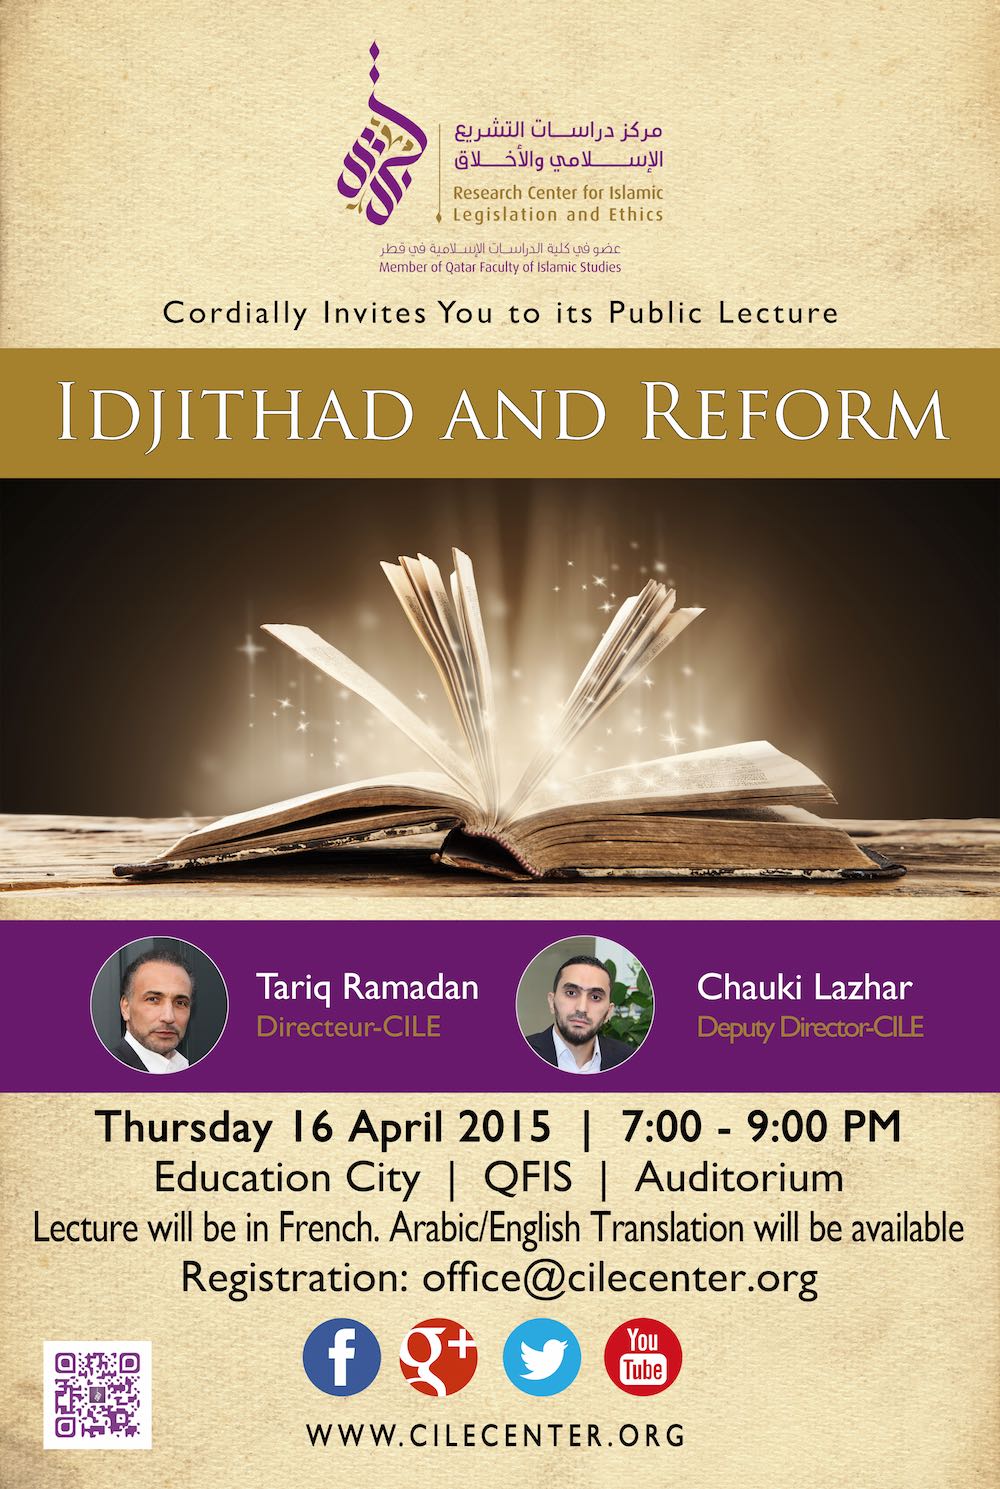 04/2015 Tariq Ramadan / Chauki Lazhar: Idjithad and Reform